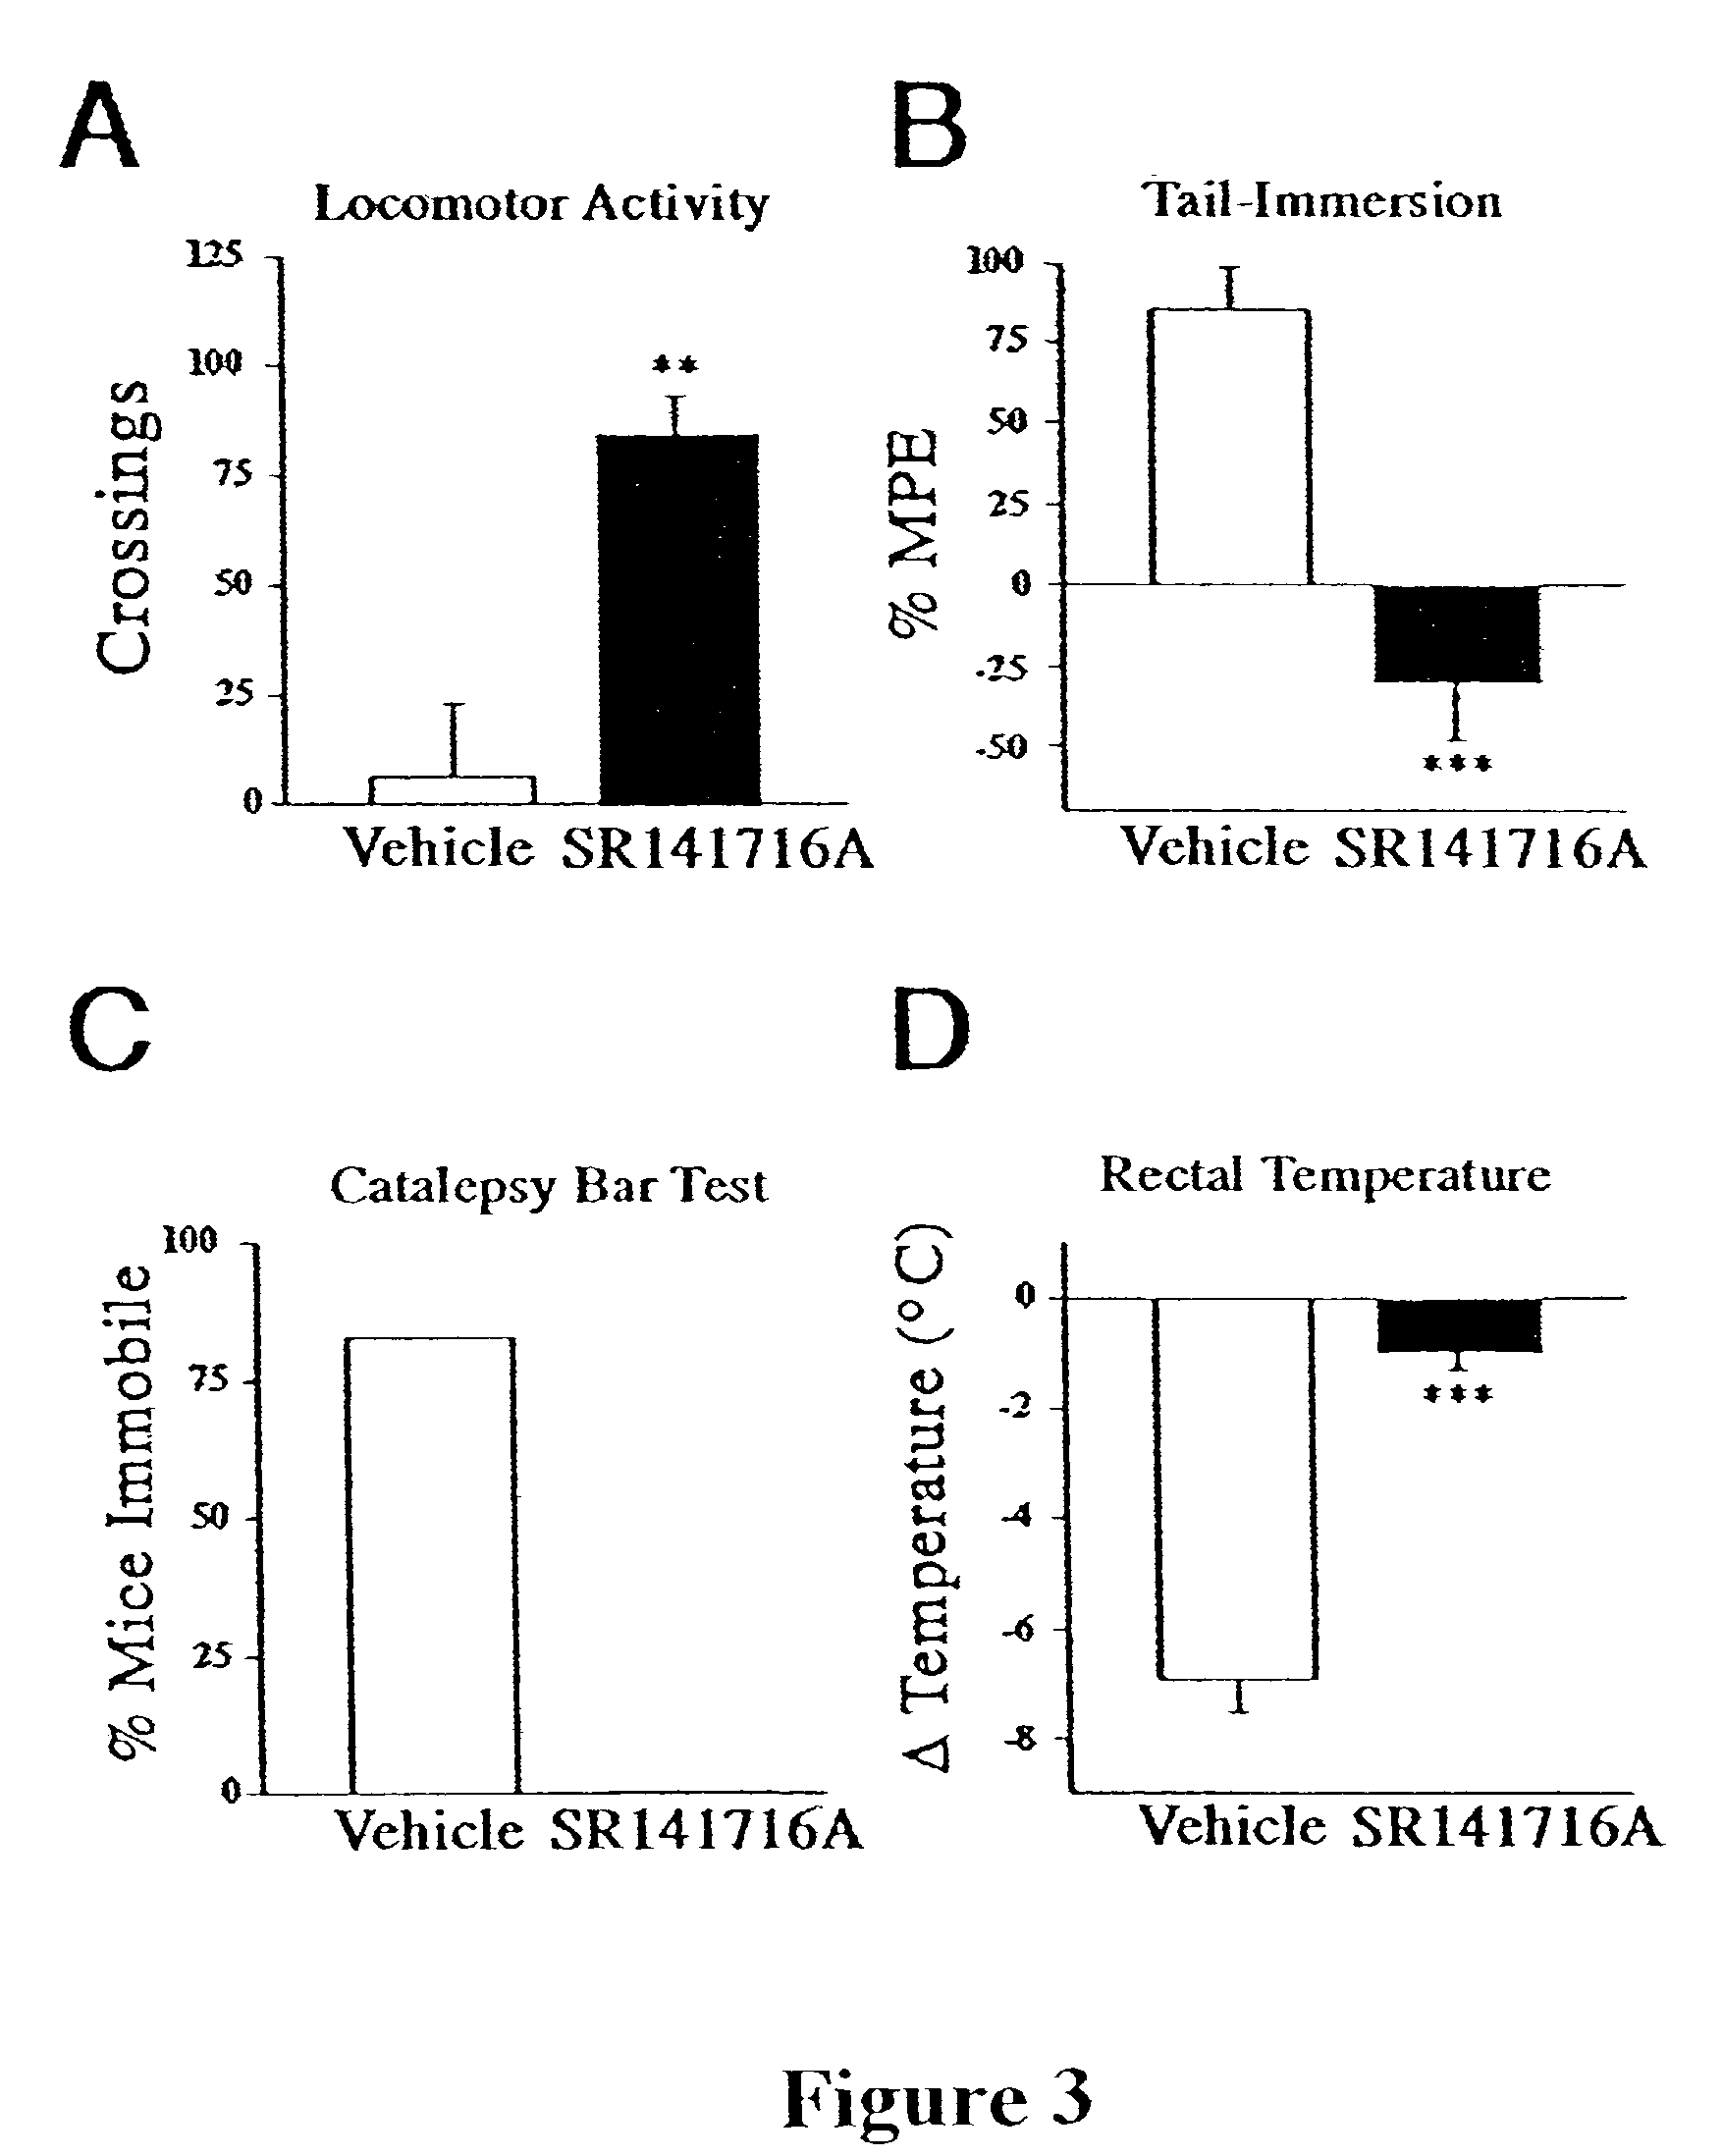 Mouse model for fatty acid amide-related neurobehaviors